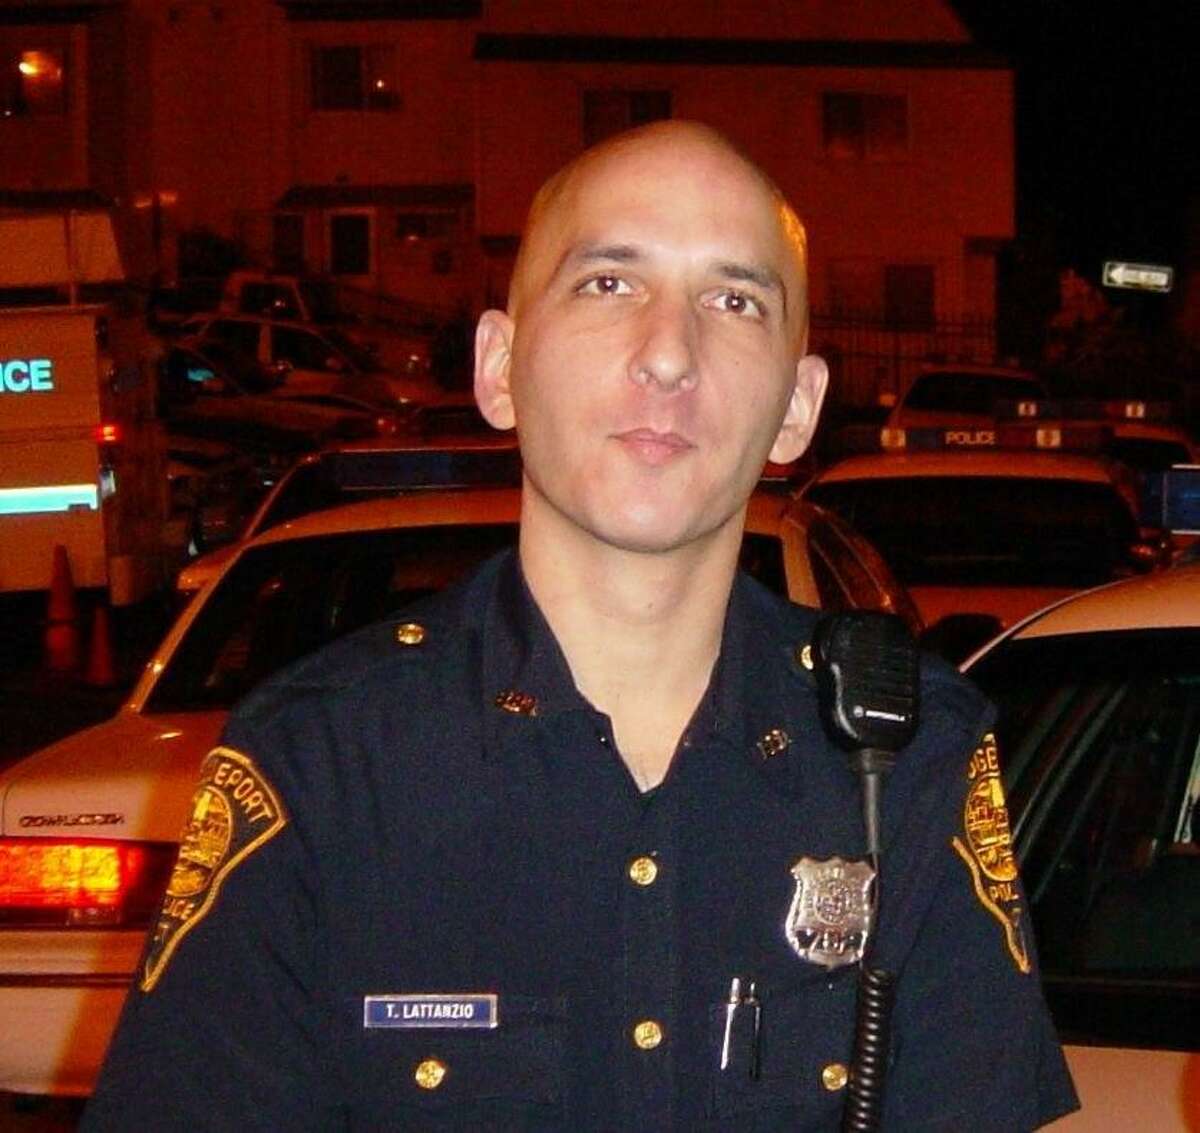 Thomas Lattanzio, Bridgeport Police Officer.